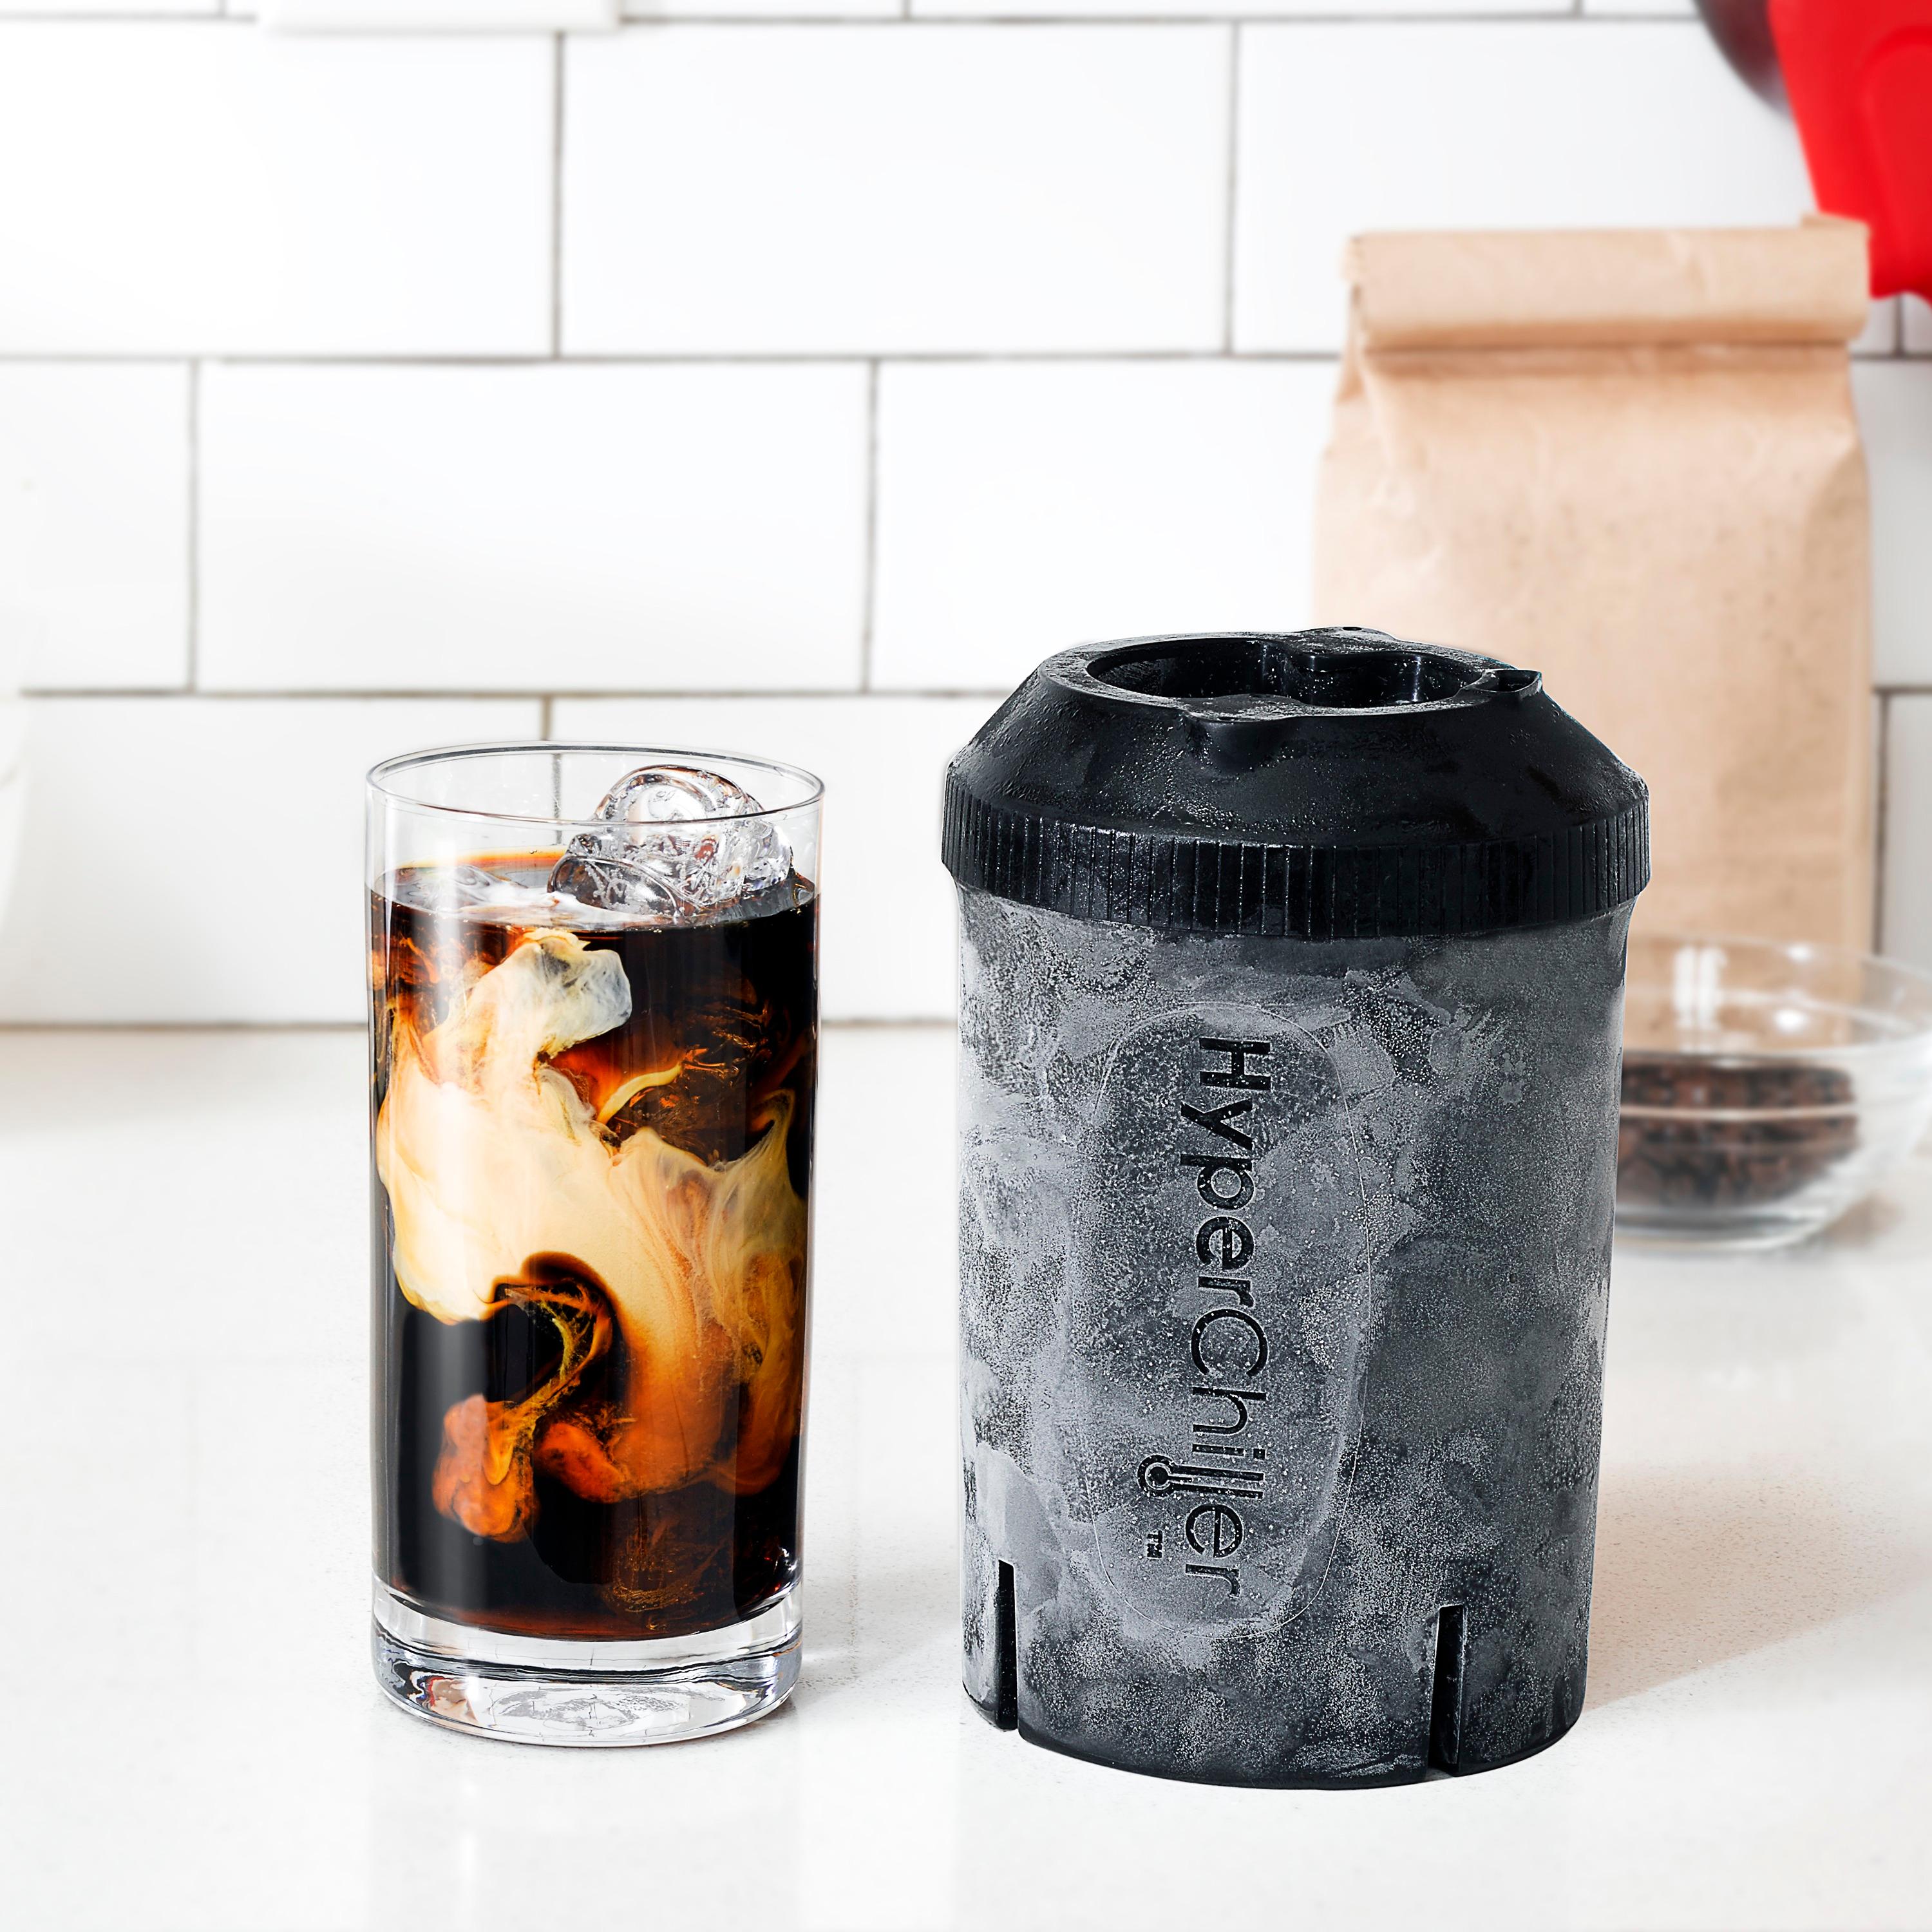 keurig coffee maker with iced coffee setting